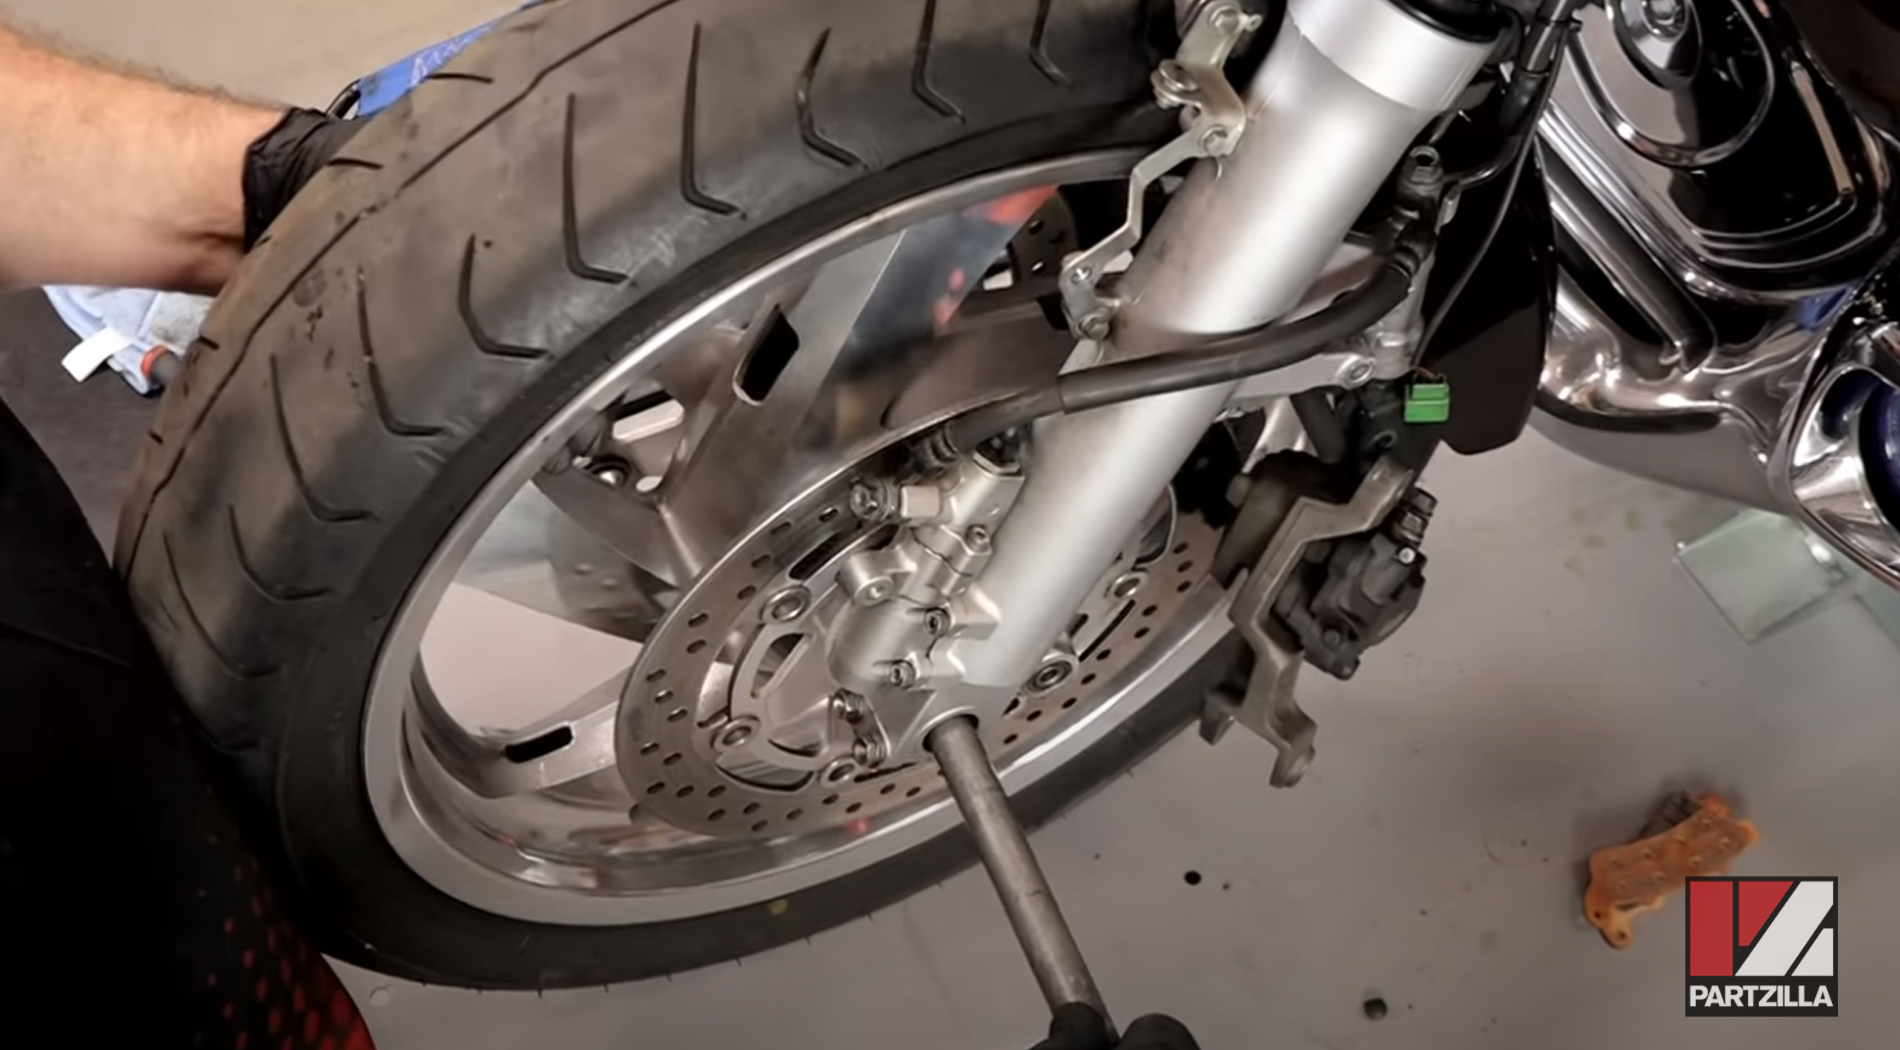 Honda Goldwing motorcycle fork seals replacement